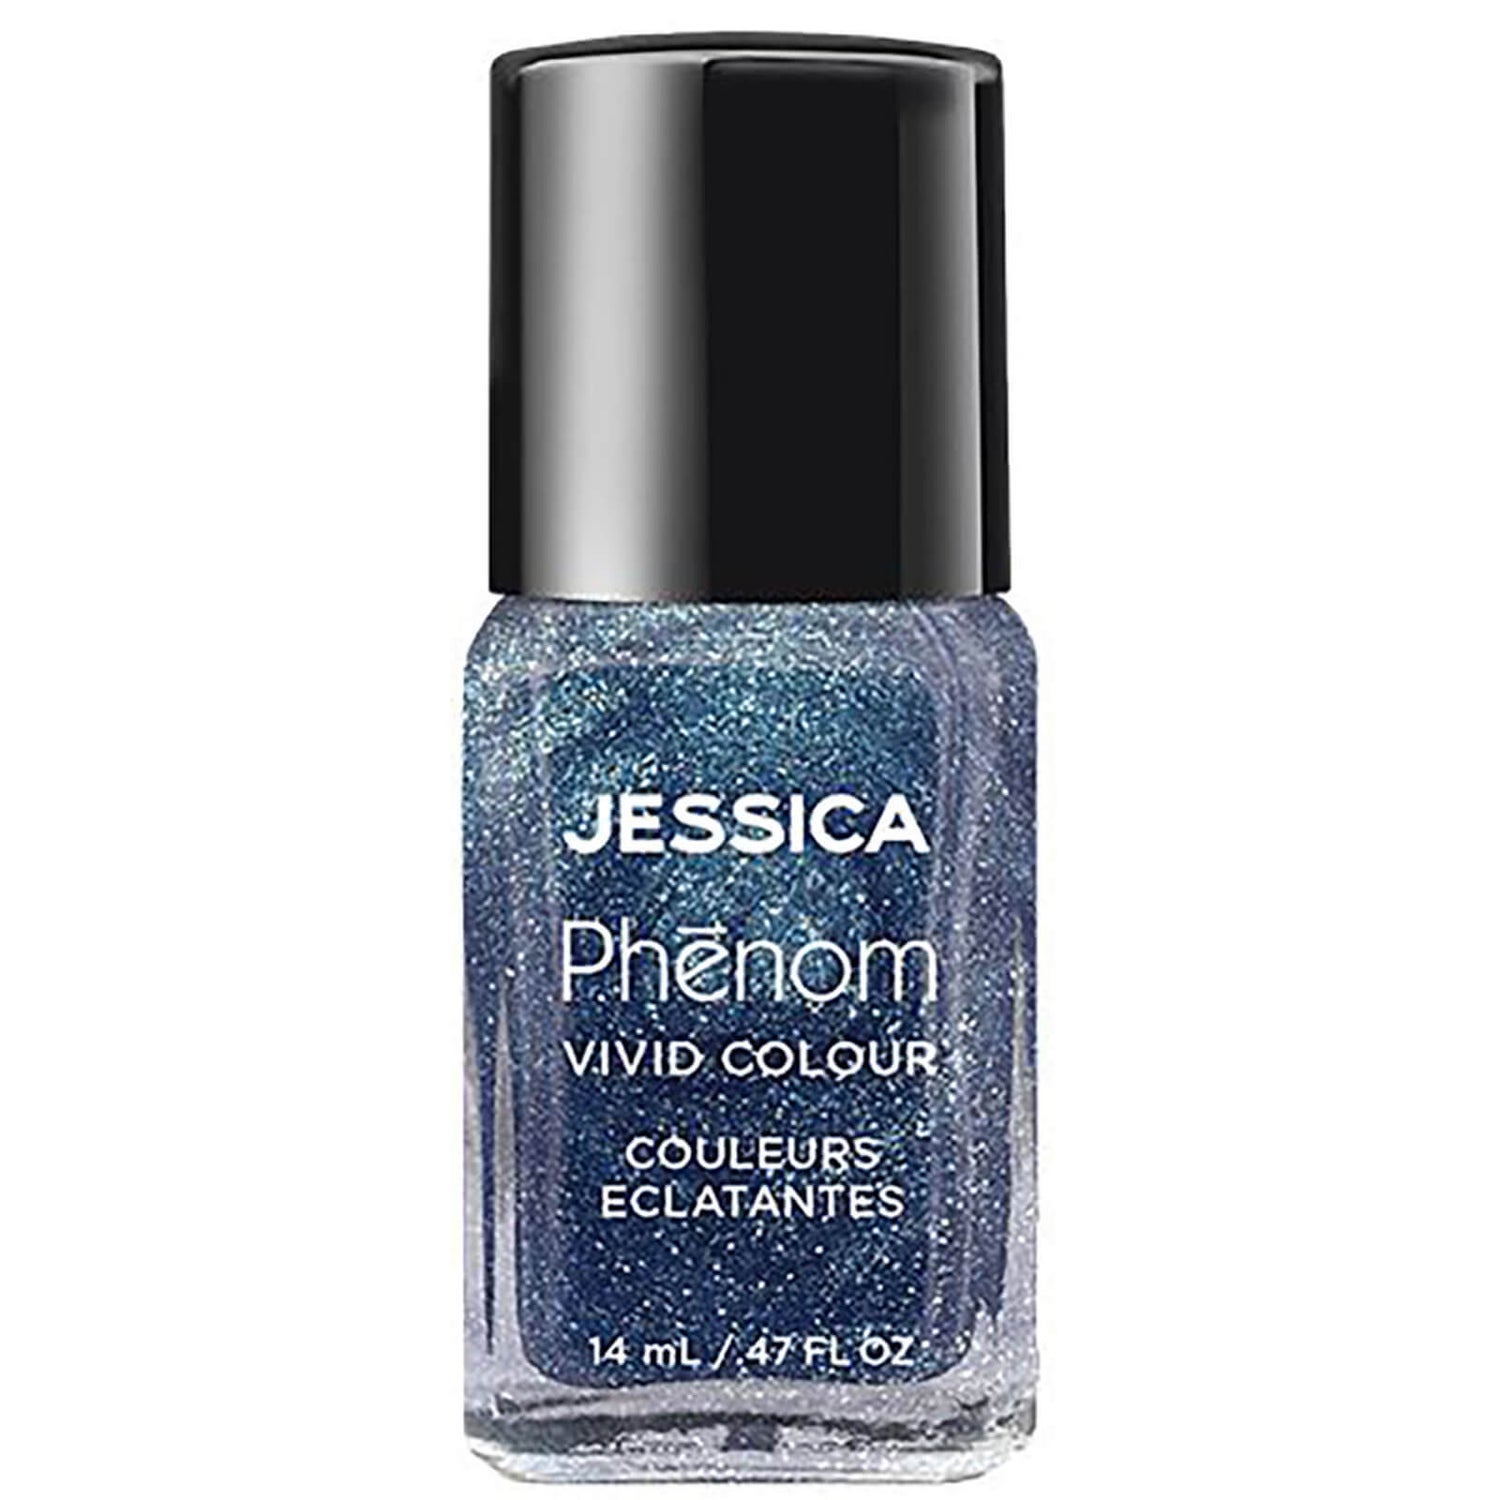 Jessica Phenom Vivid Nail Colour 14ml - Blue Nauticals